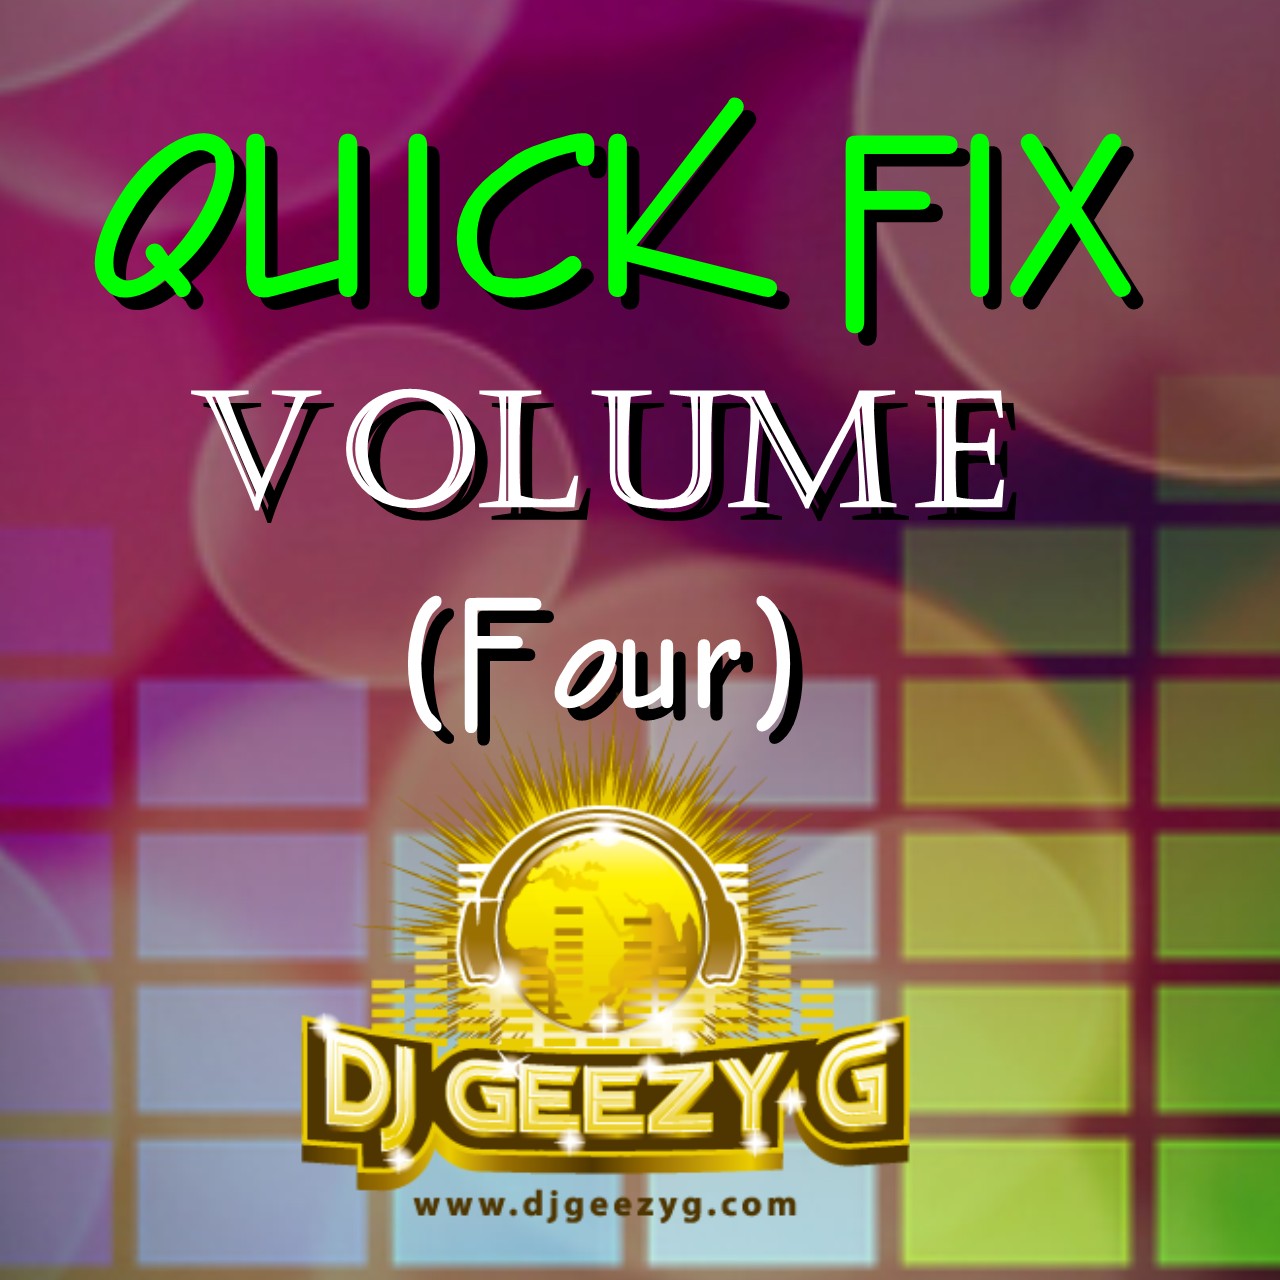 DJ GEEZY G - QUICK FIX VOLUME 6 (Top 40, EDM, Pop, Tropical House)